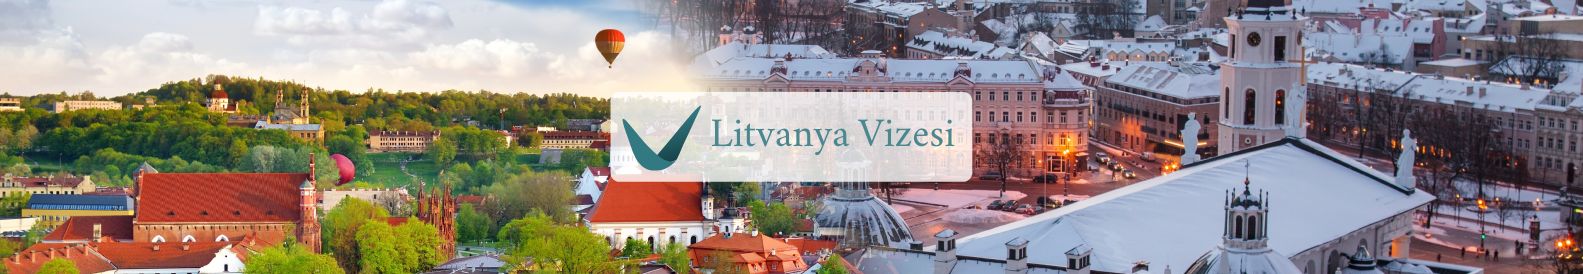 Litvanya Vizesi